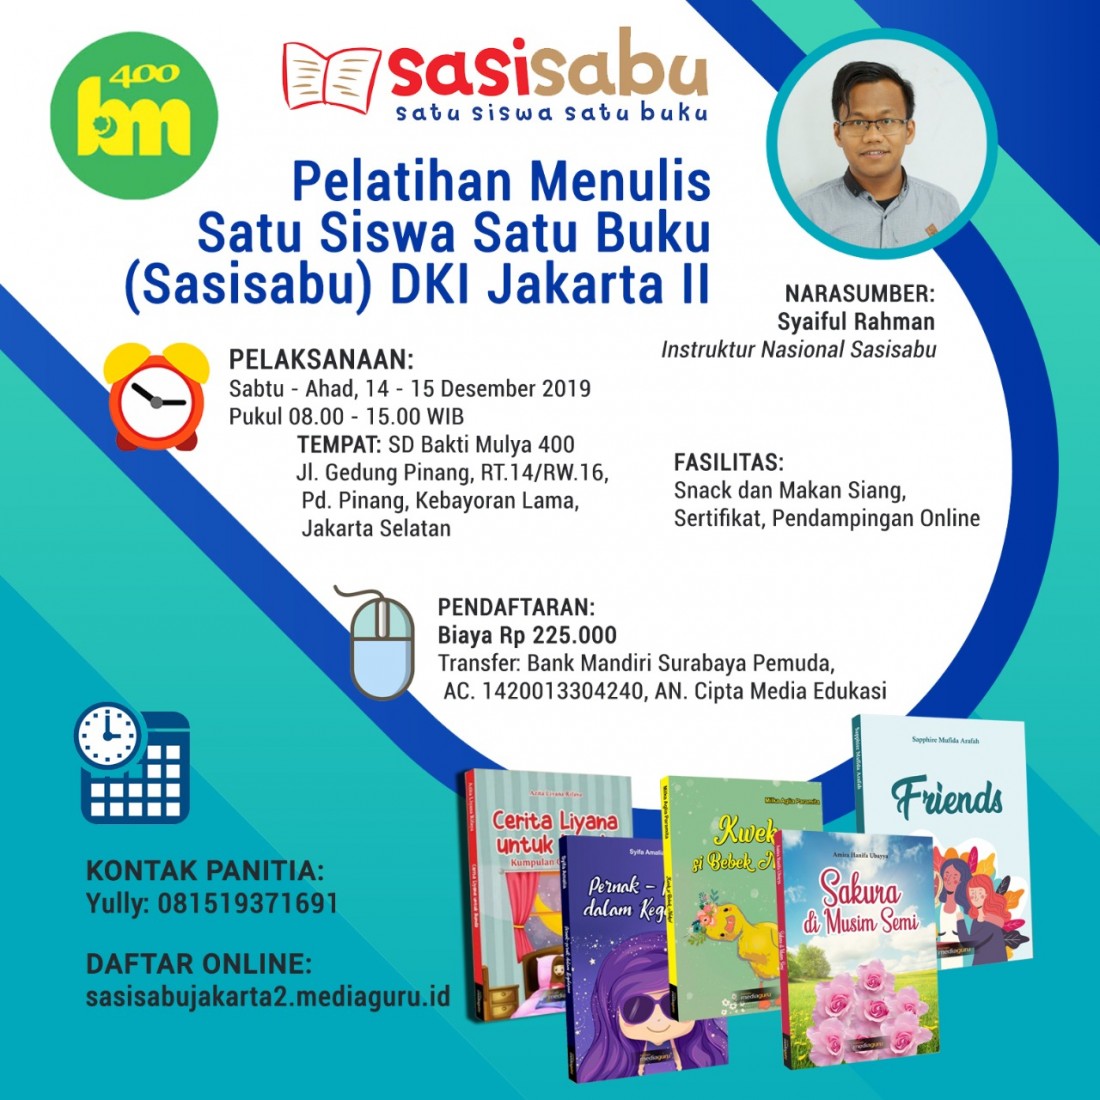 Pelatihan Menulis Satu Siswa Satu Buku (Sasisabu) DKI Jakarta II (14 - 15 Desember 2019)